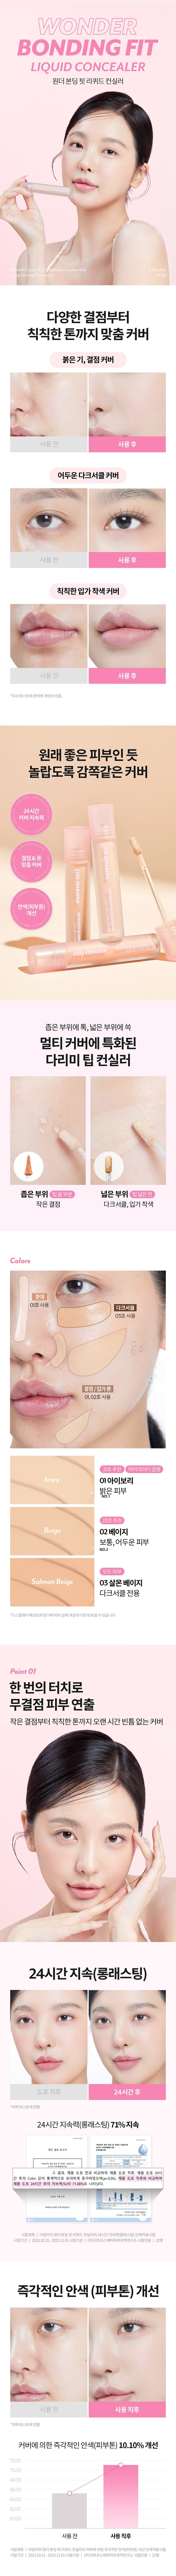 MEMEBOX Wonder Bonding Fit Liquid concealer korean skincare product online shop malaysia china macau1